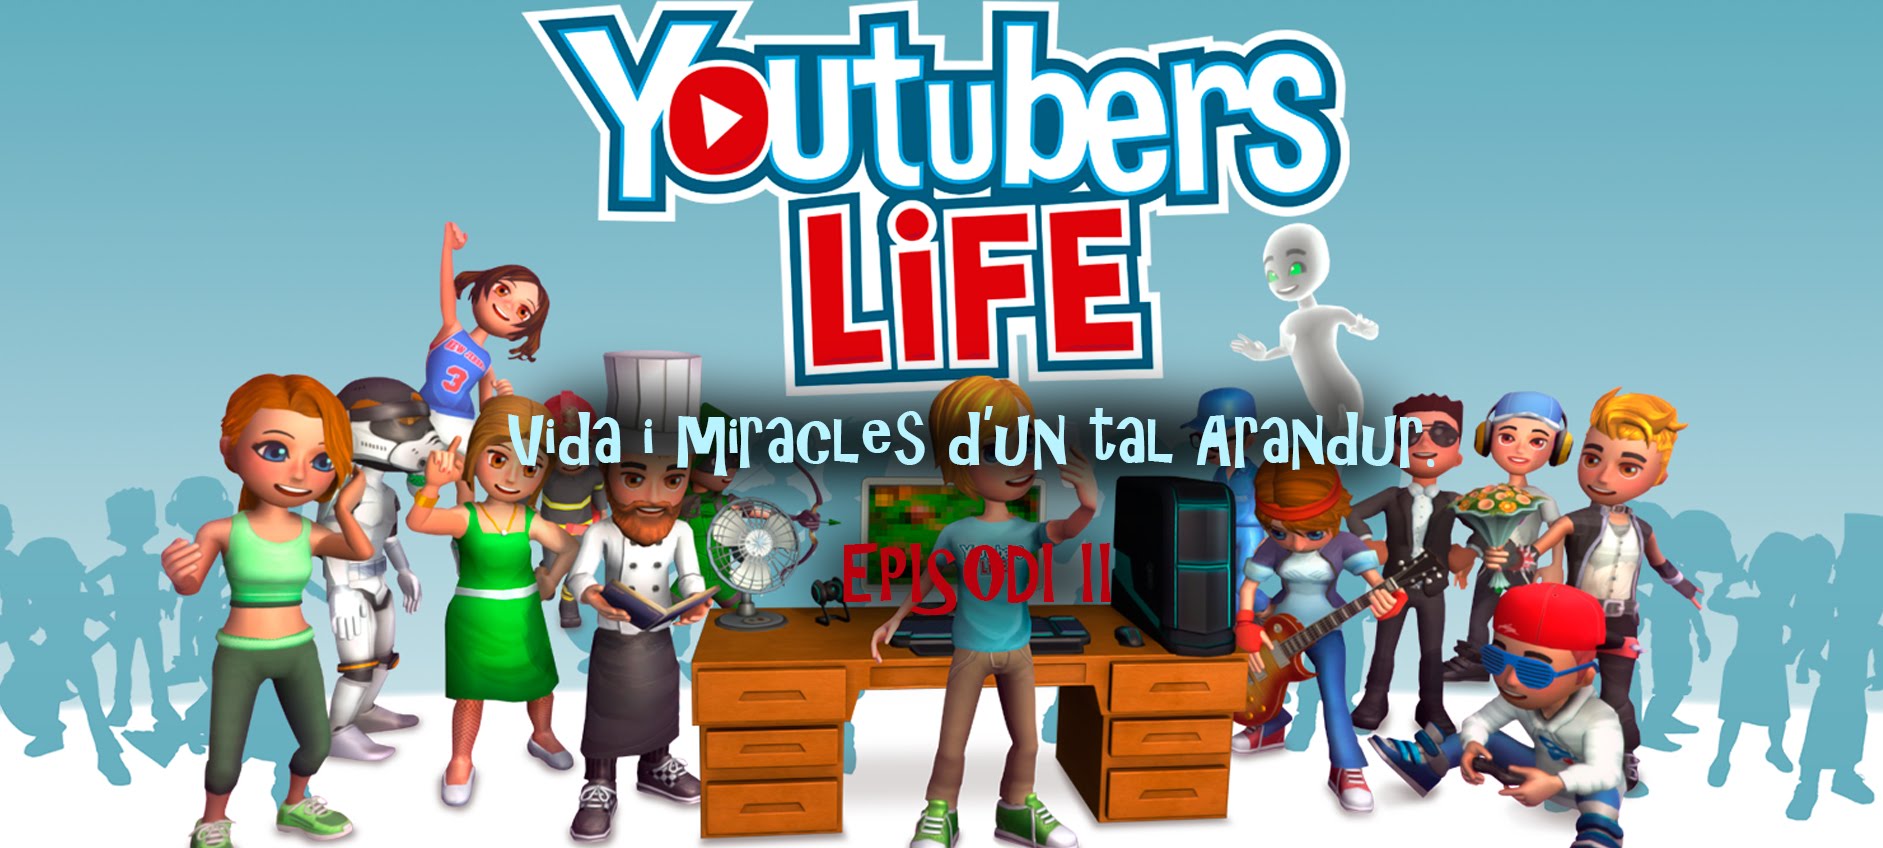 Youtubers Life. Part 2. Visita al GameWorld de Arandur